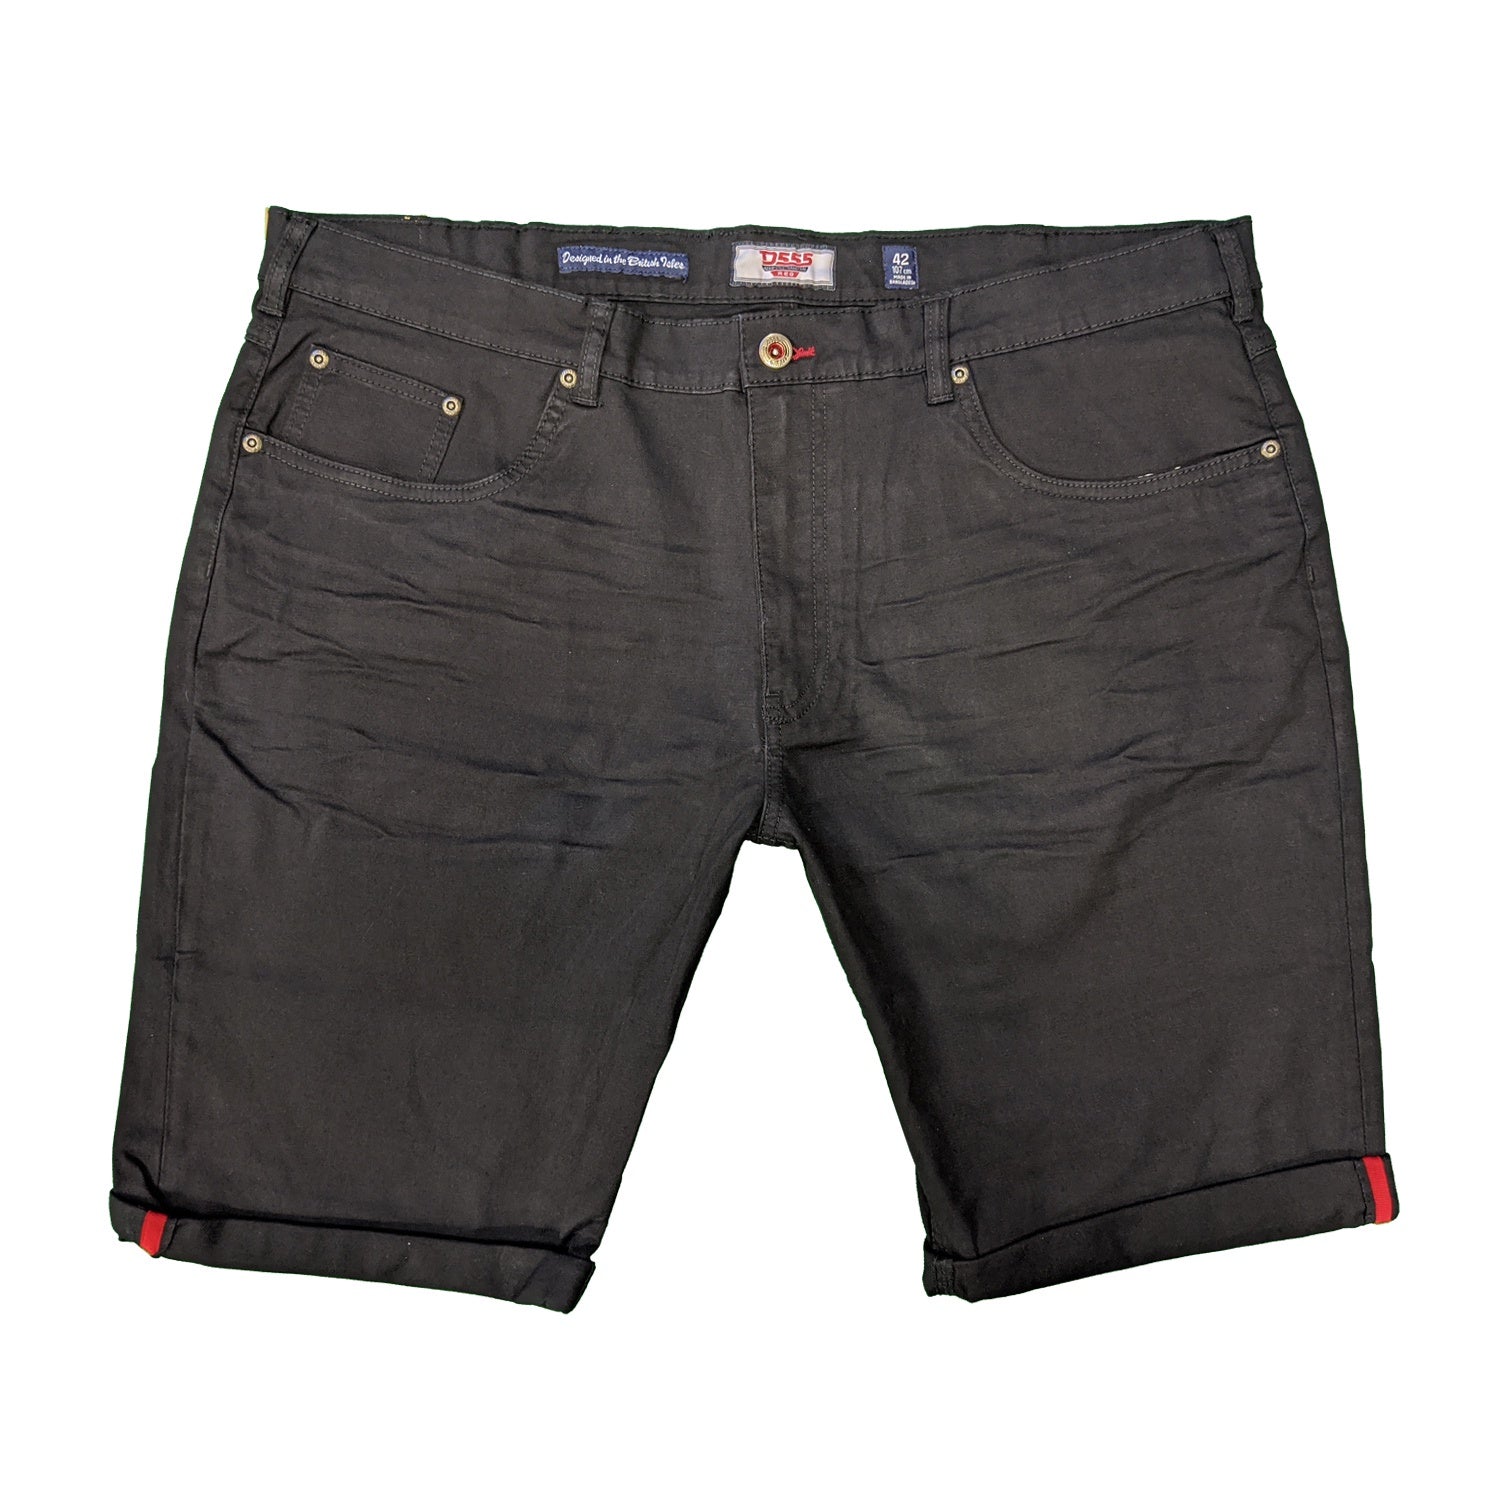 D555 Stretch Denim Shorts - KS20709 - Gilbert - Black 1